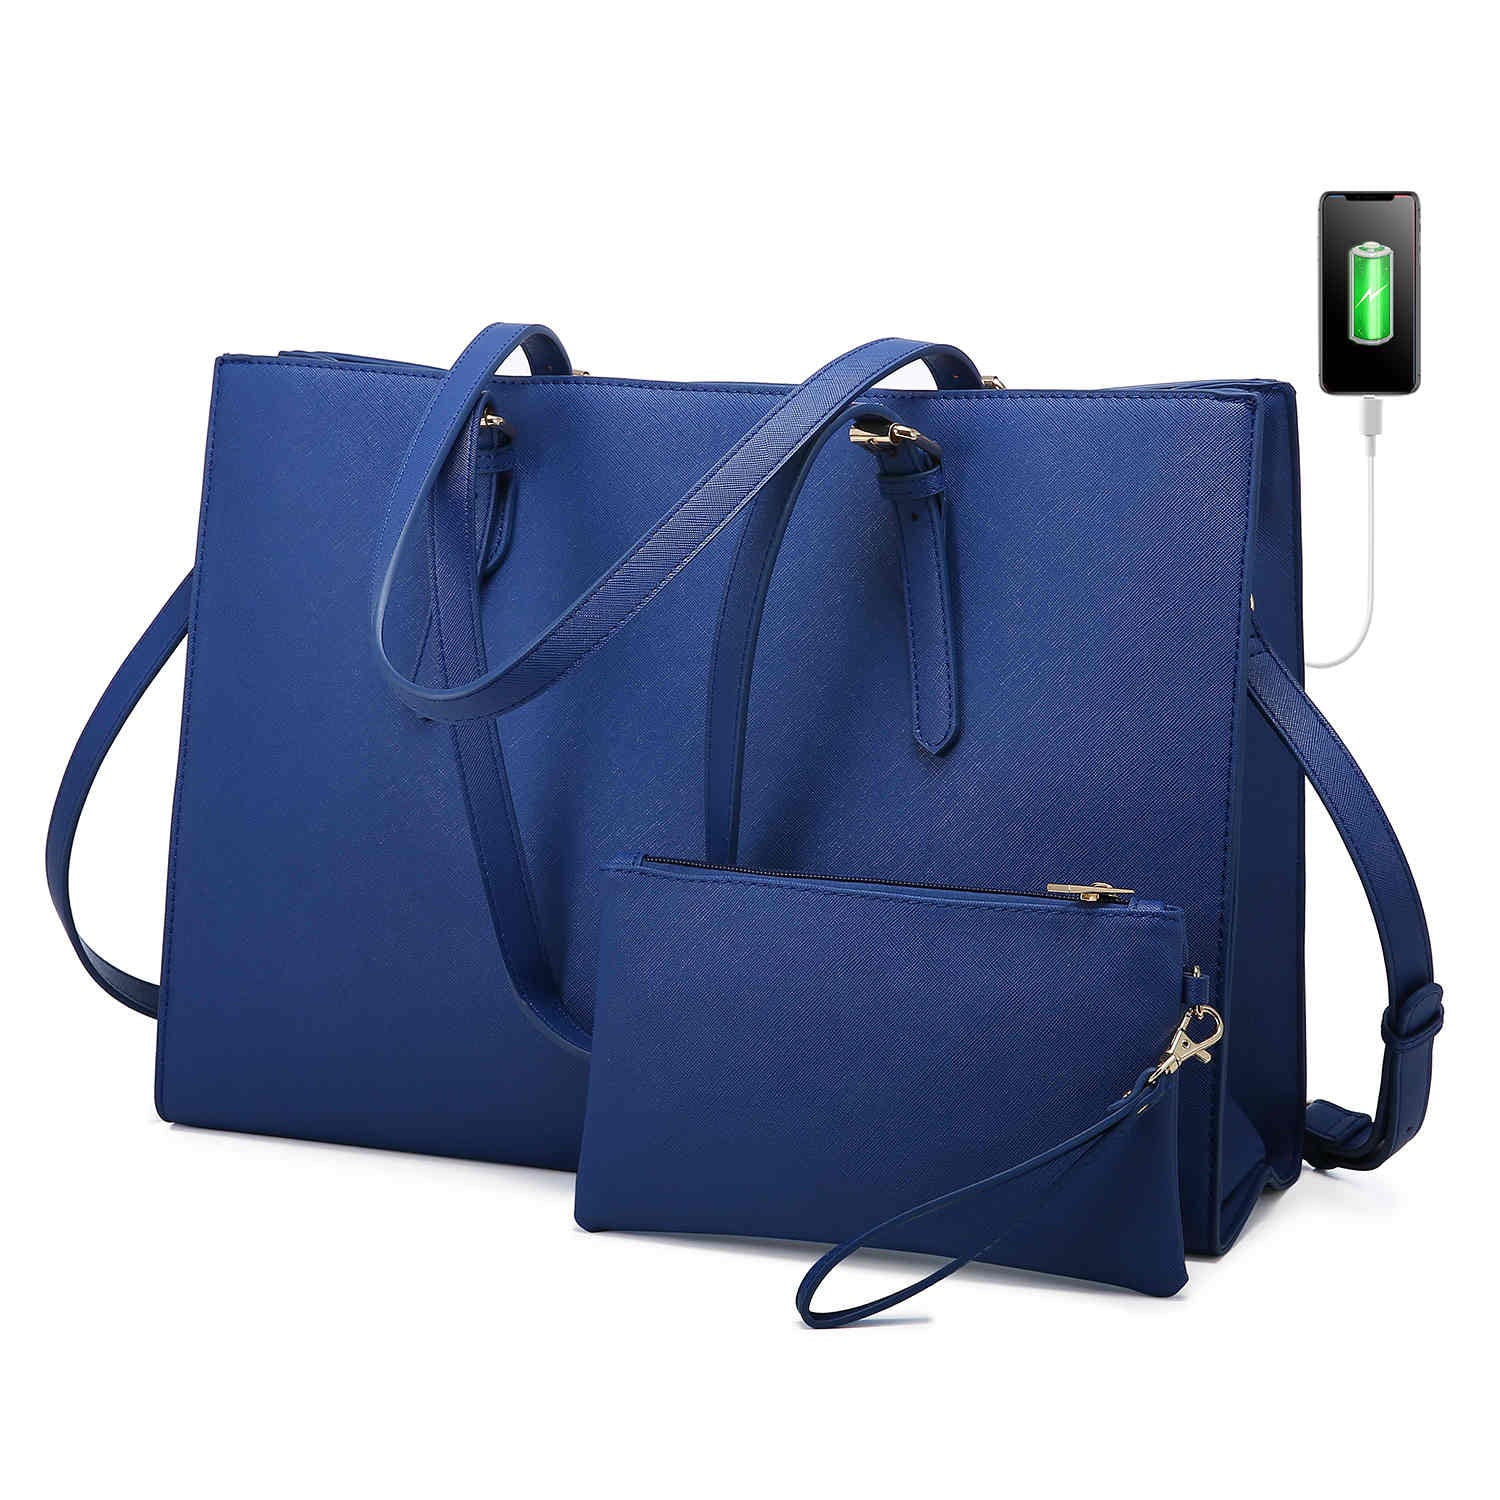 Dial hook pk 3940 shoulder bag faux leather navy Blue Black Paisley design